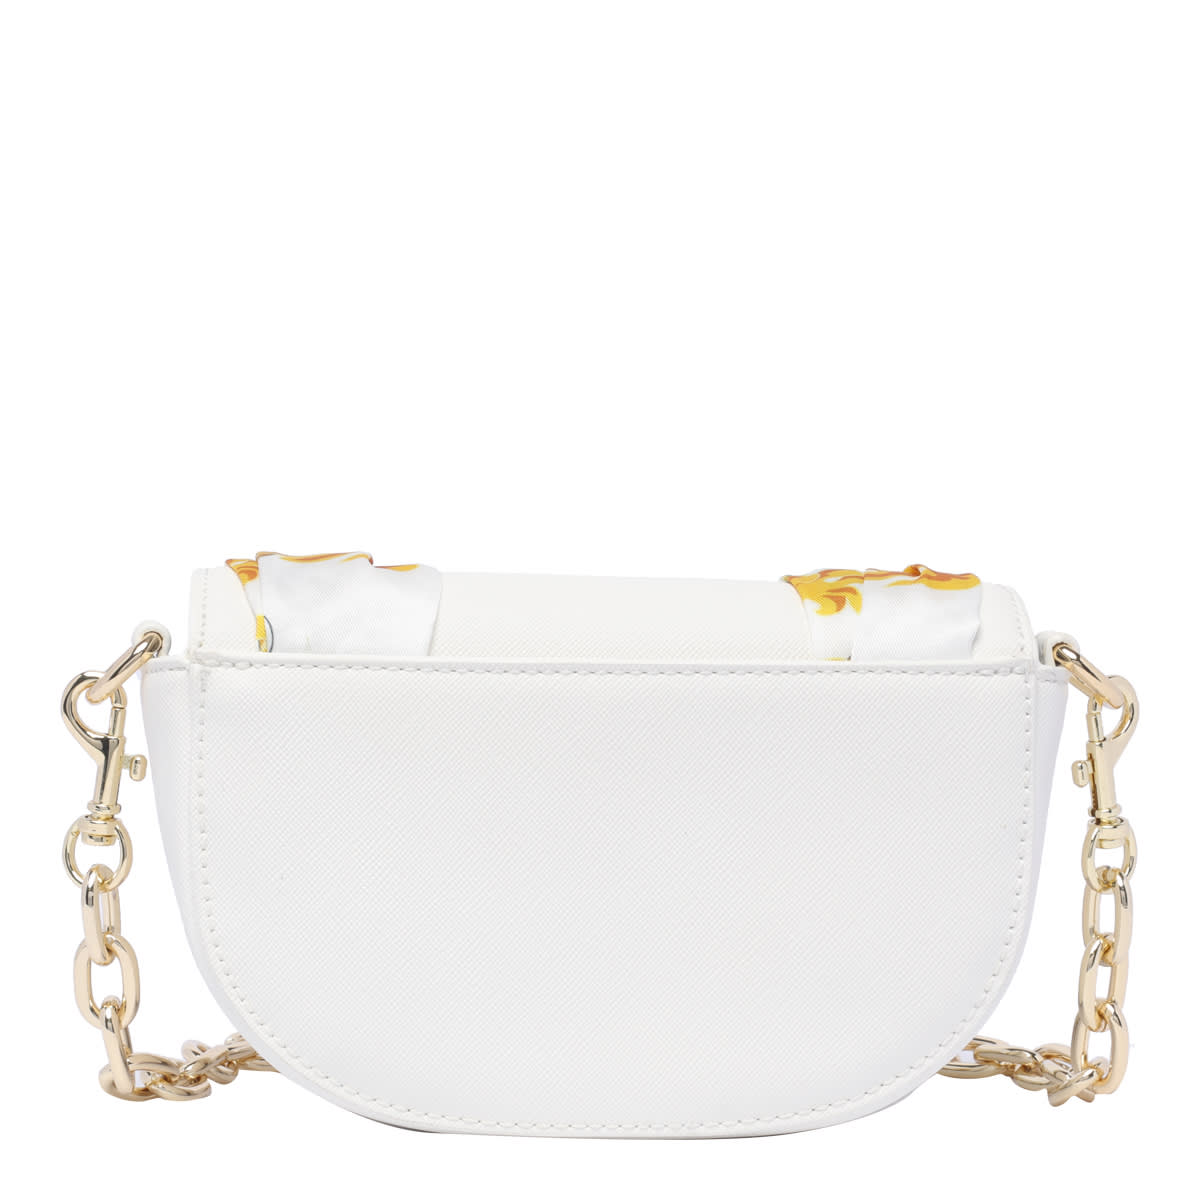 Buy Versace Jeans White Chain Crossbody Bag Online - 335874